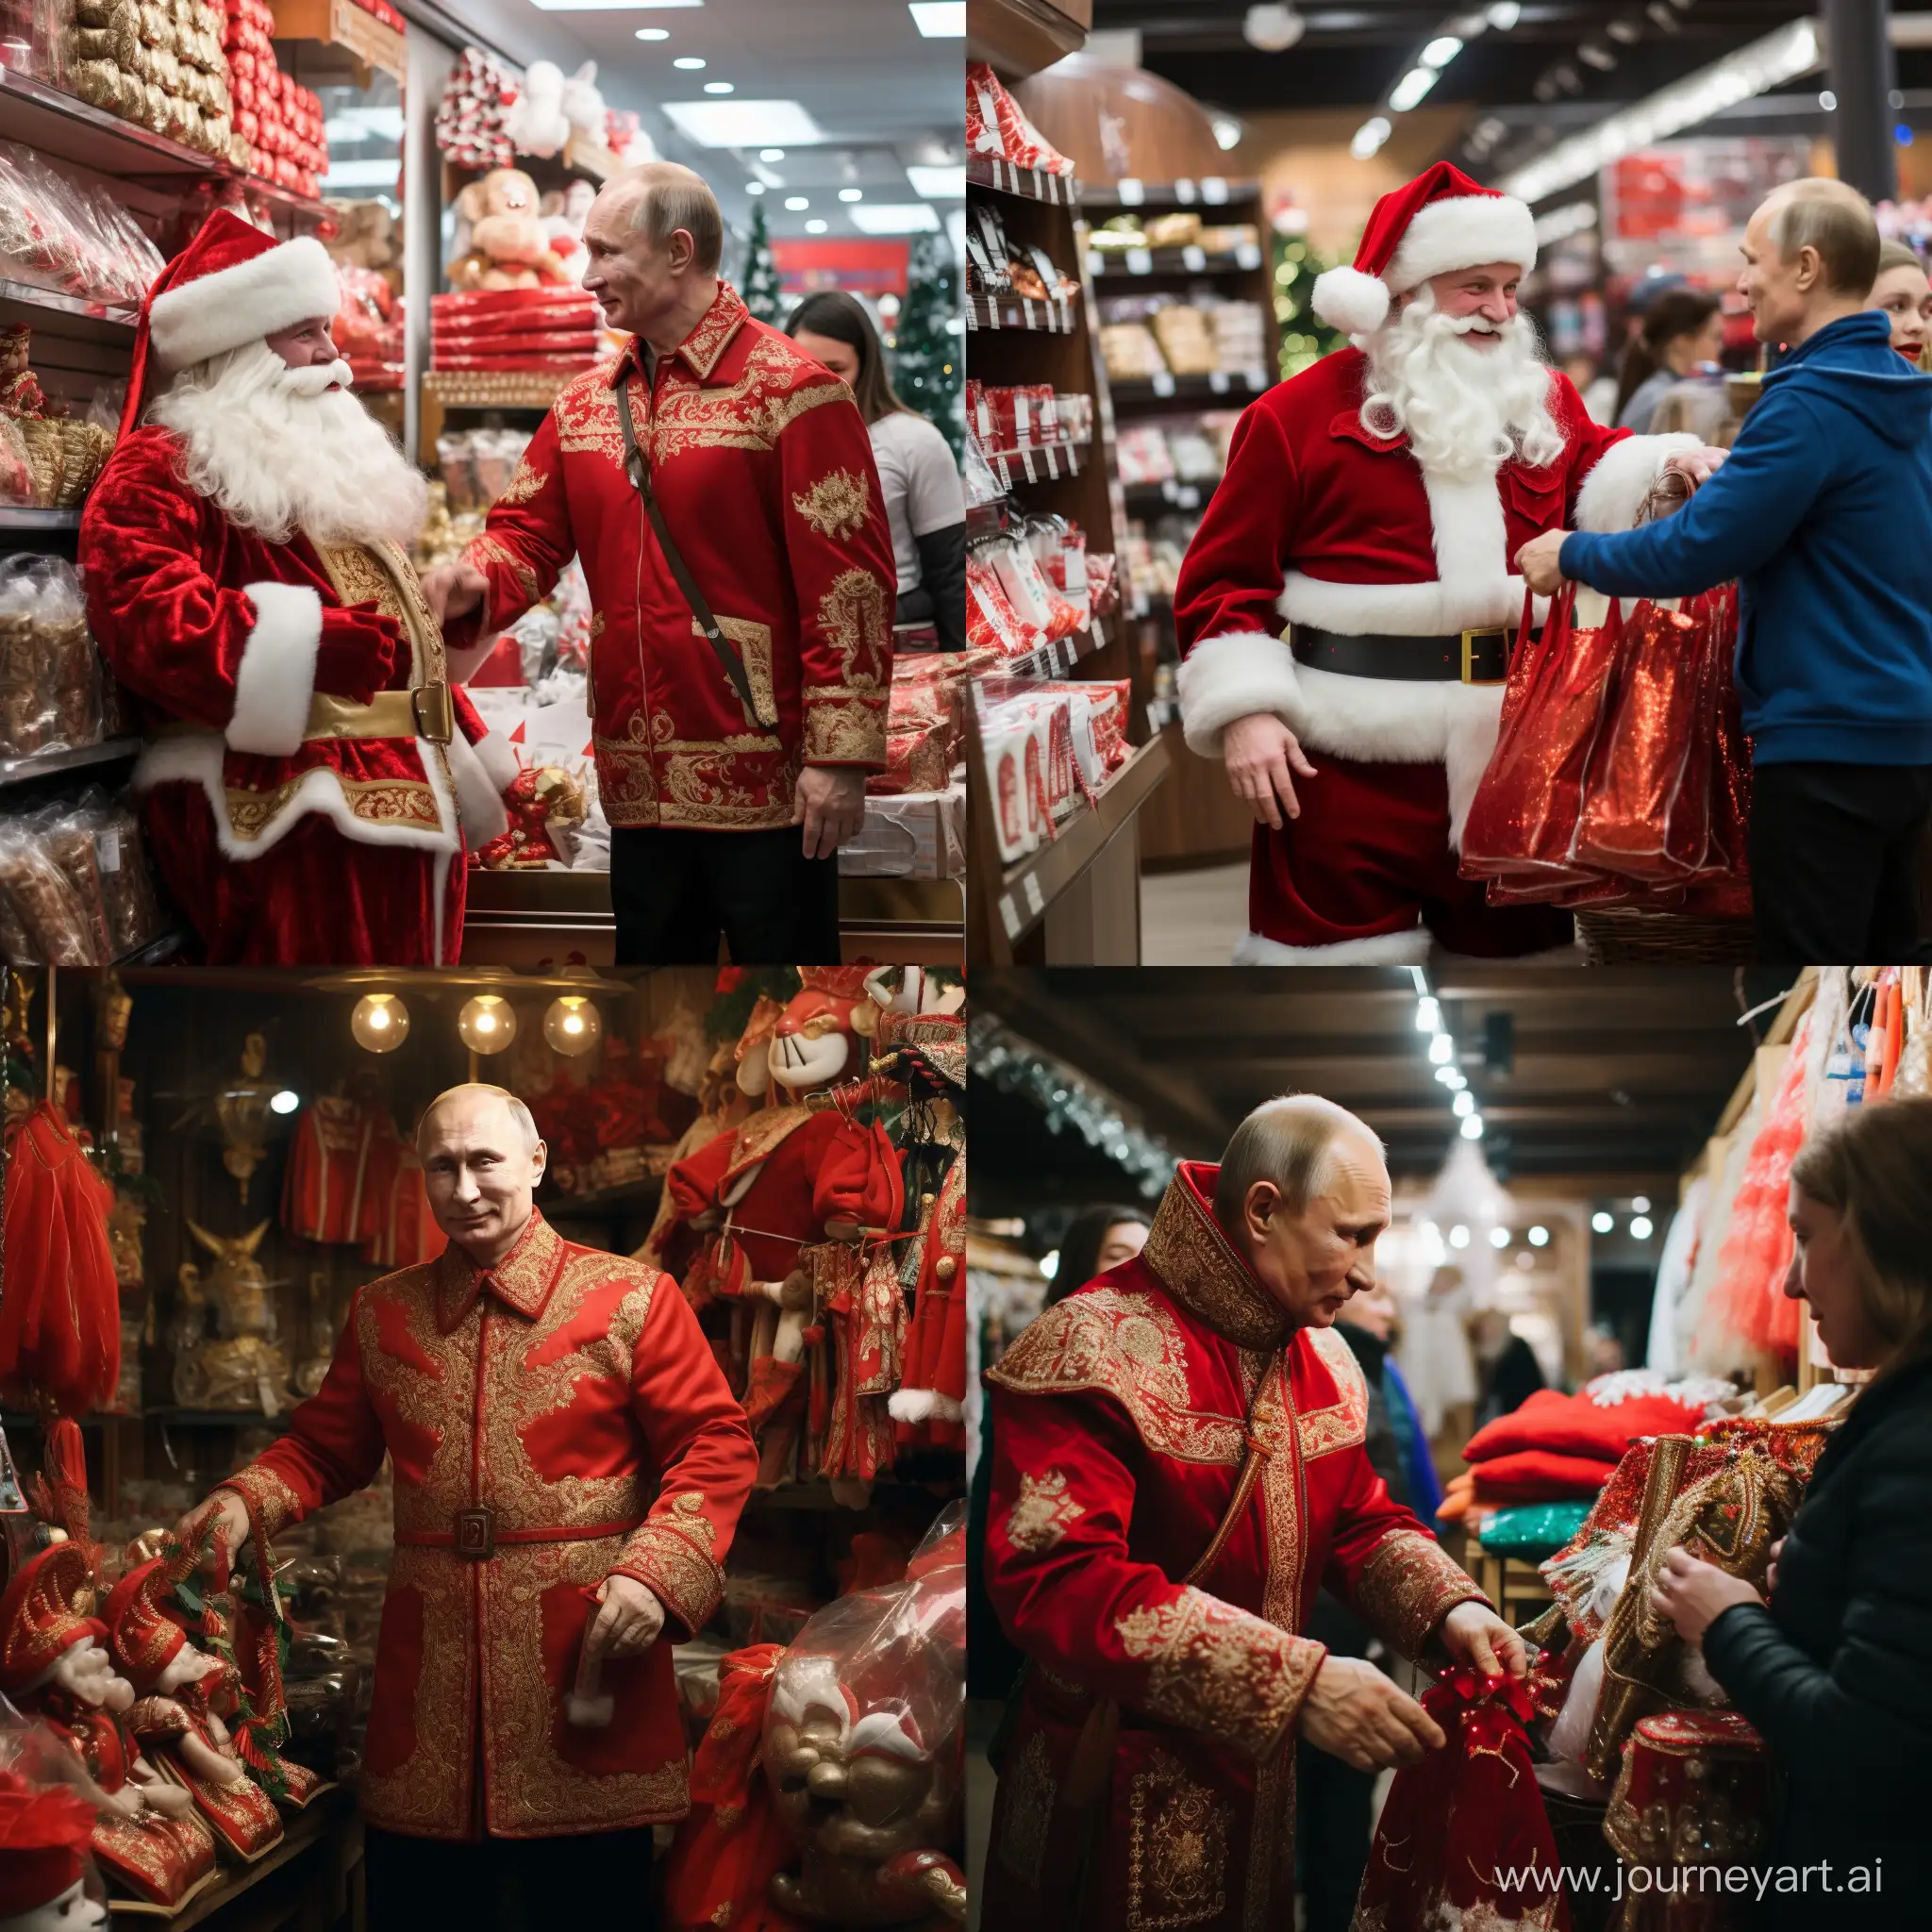 Vladimir-Putin-as-Santa-Claus-Distributing-Gifts-in-a-Spacious-Store